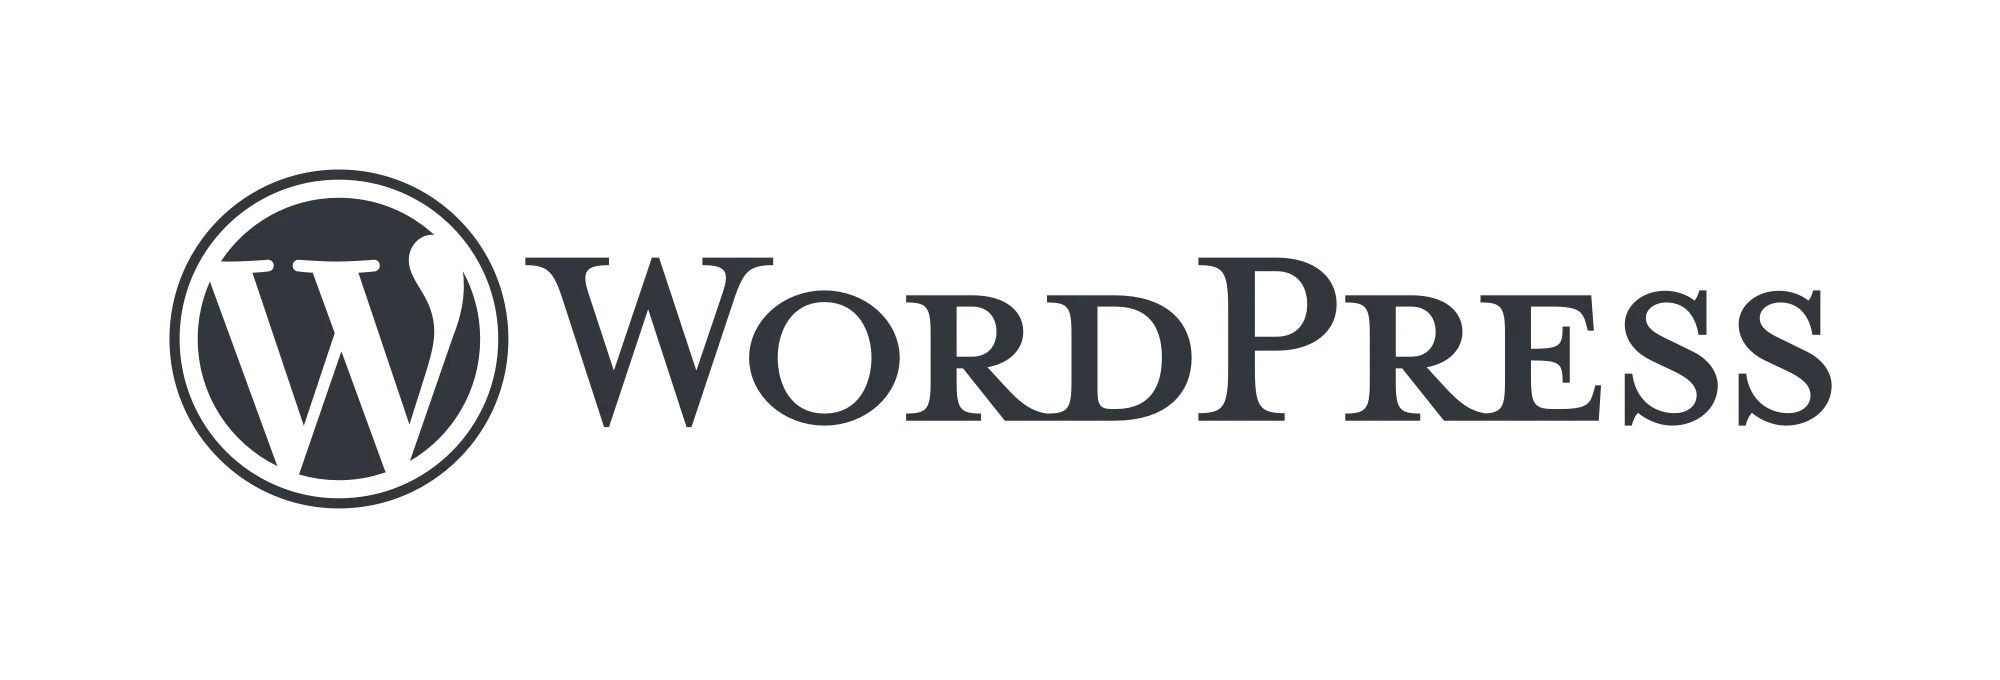 WordPress-logotype-standard (1)